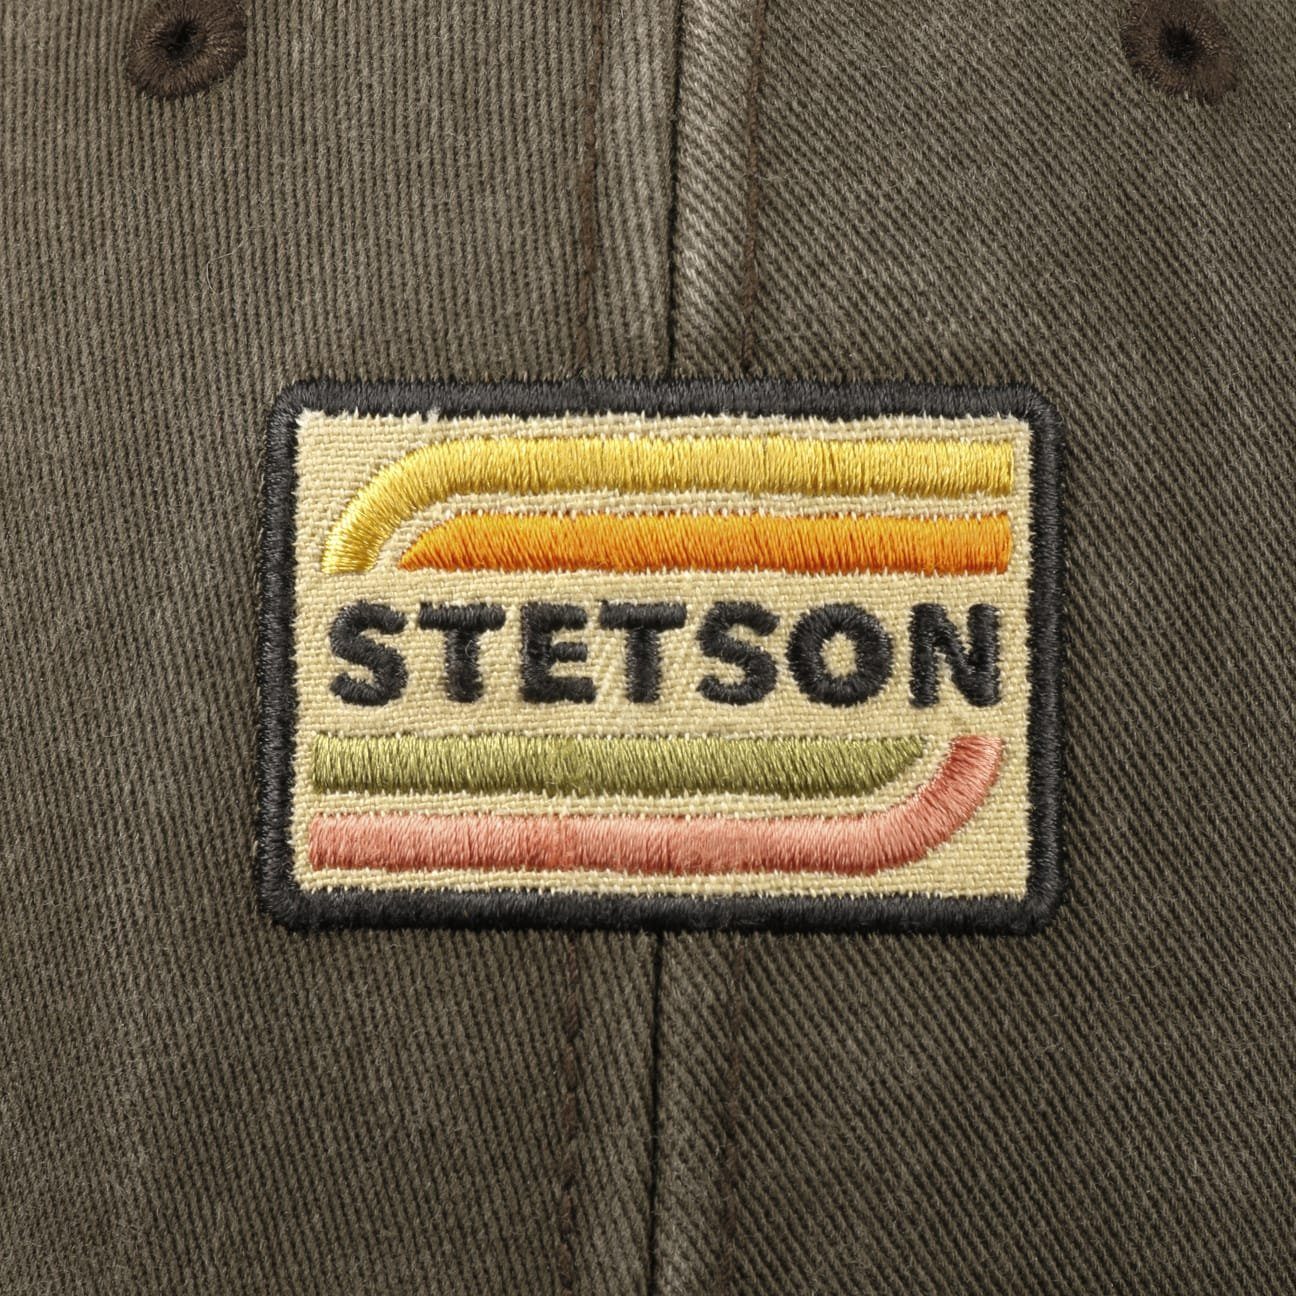 Stetson Baseball Cap (1-St) Metallschnalle 5